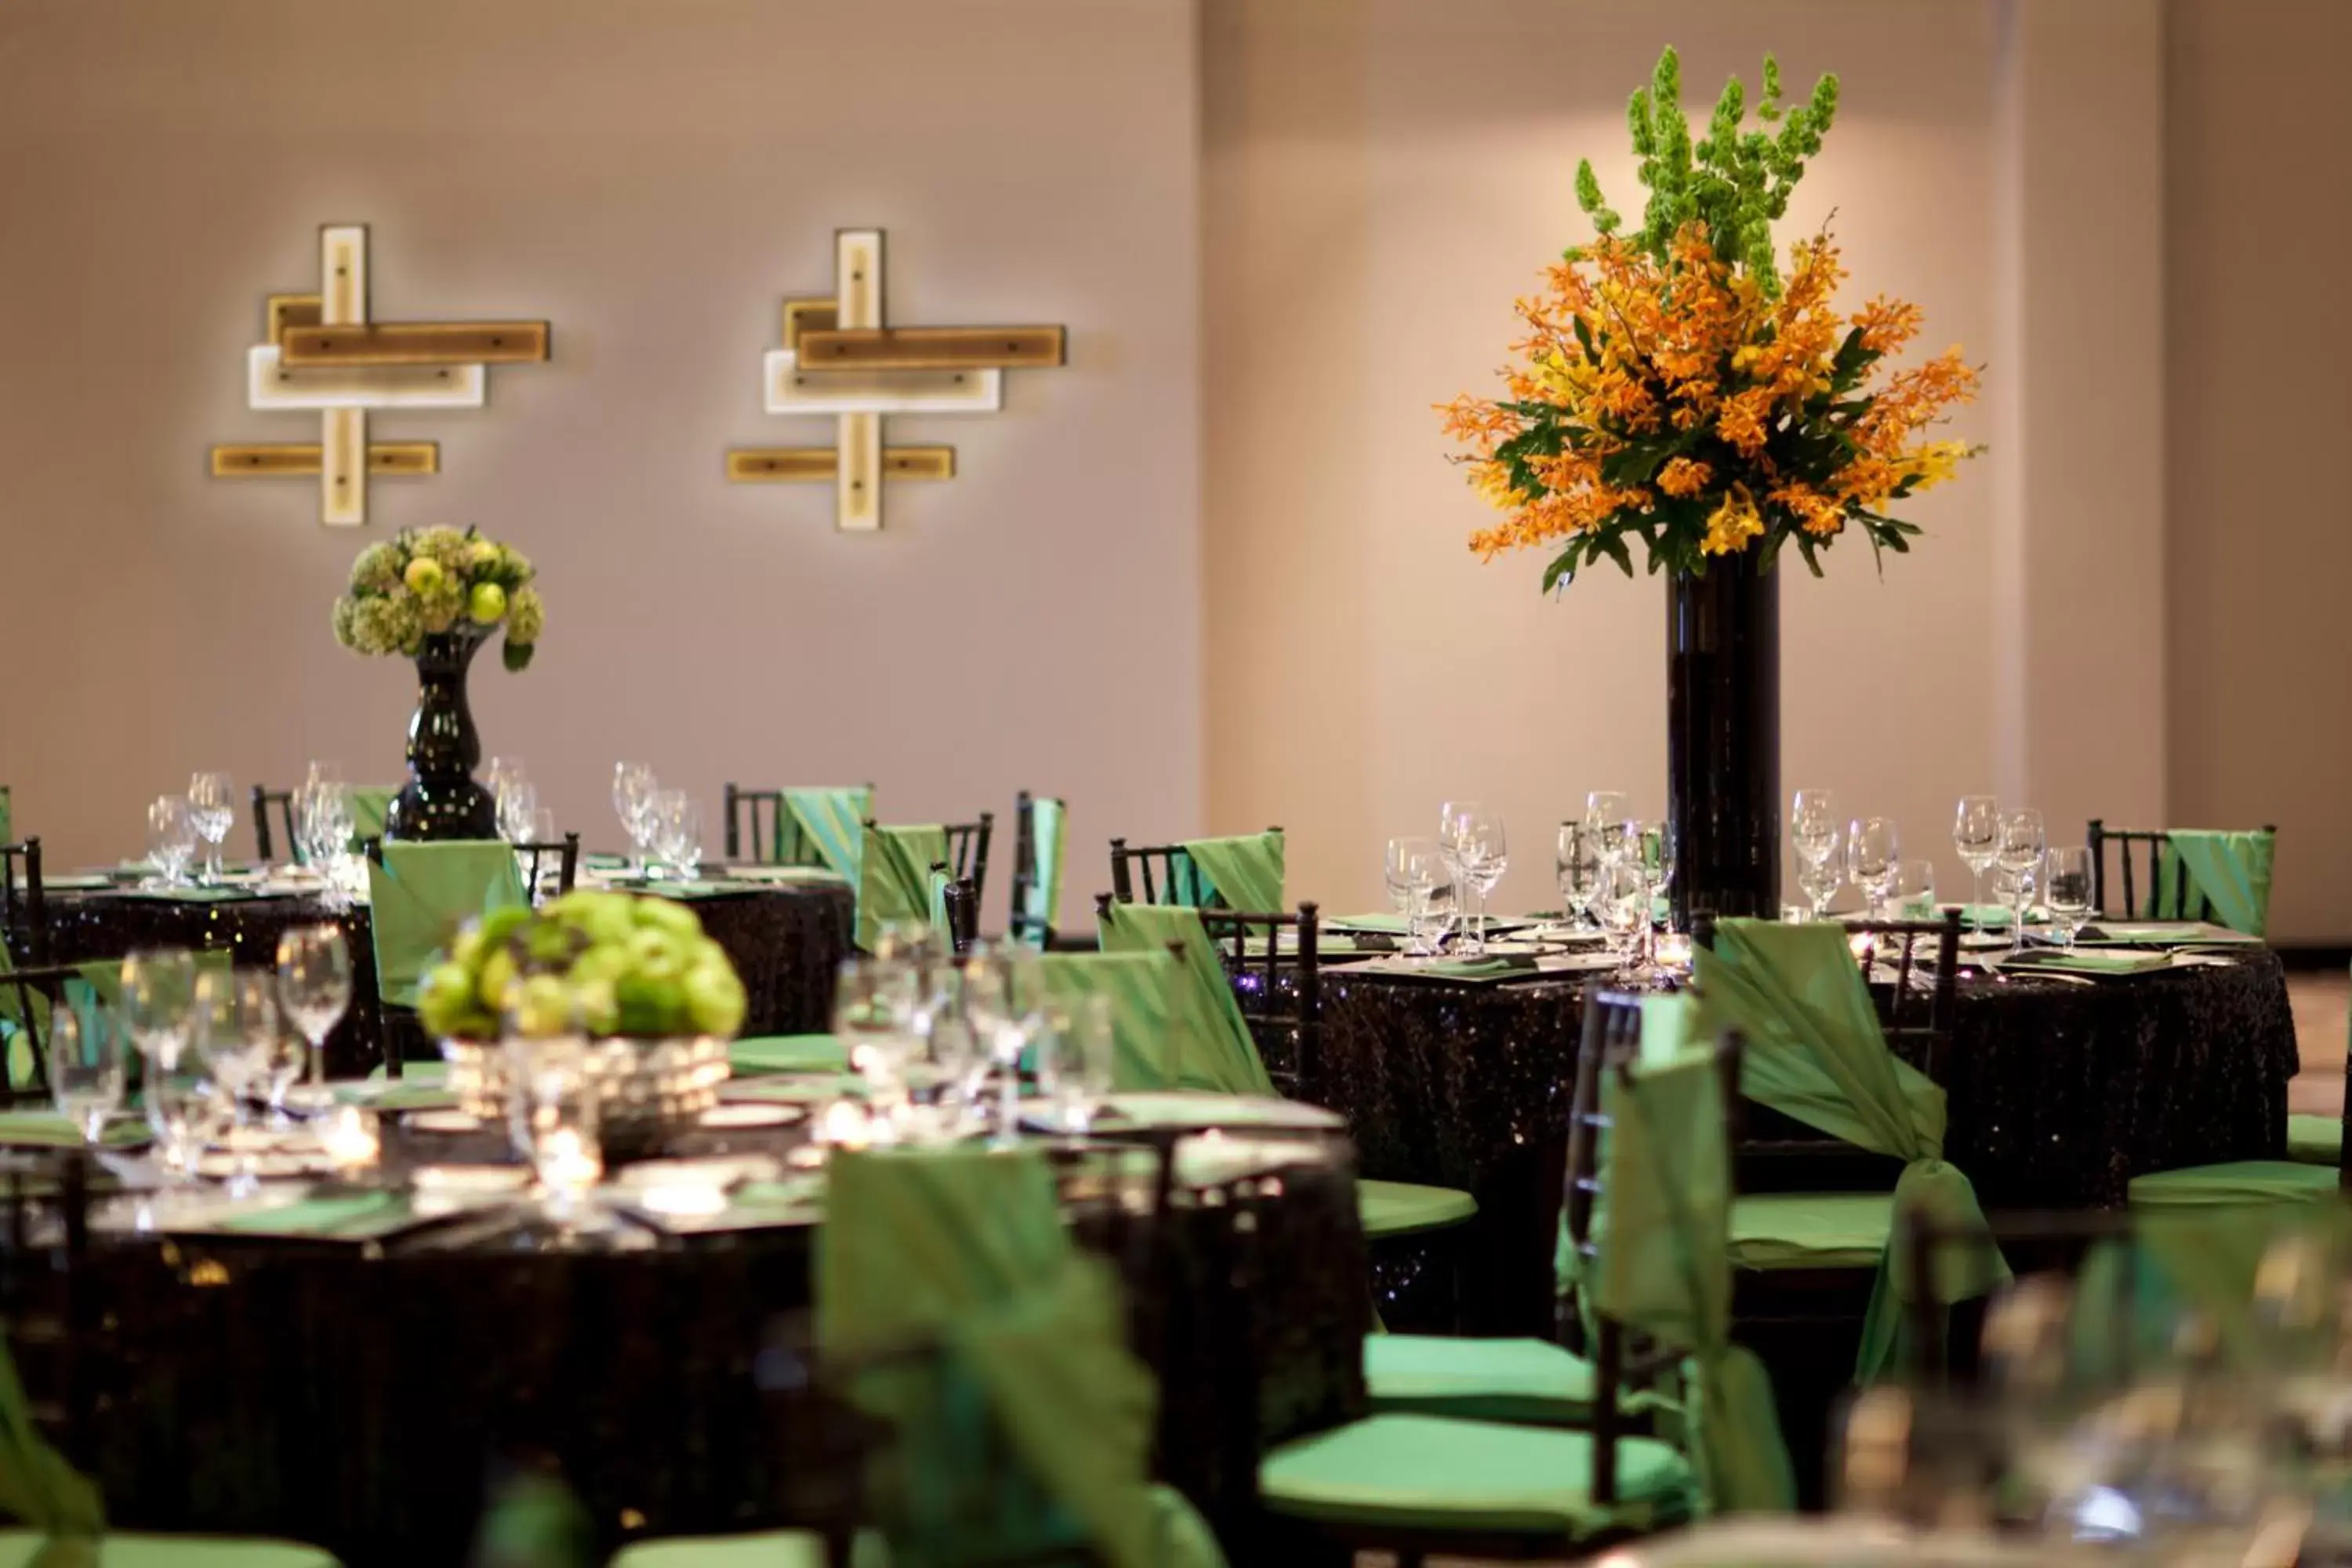 Banquet/Function facilities, Restaurant/Places to Eat in Hotel Derek Houston Galleria